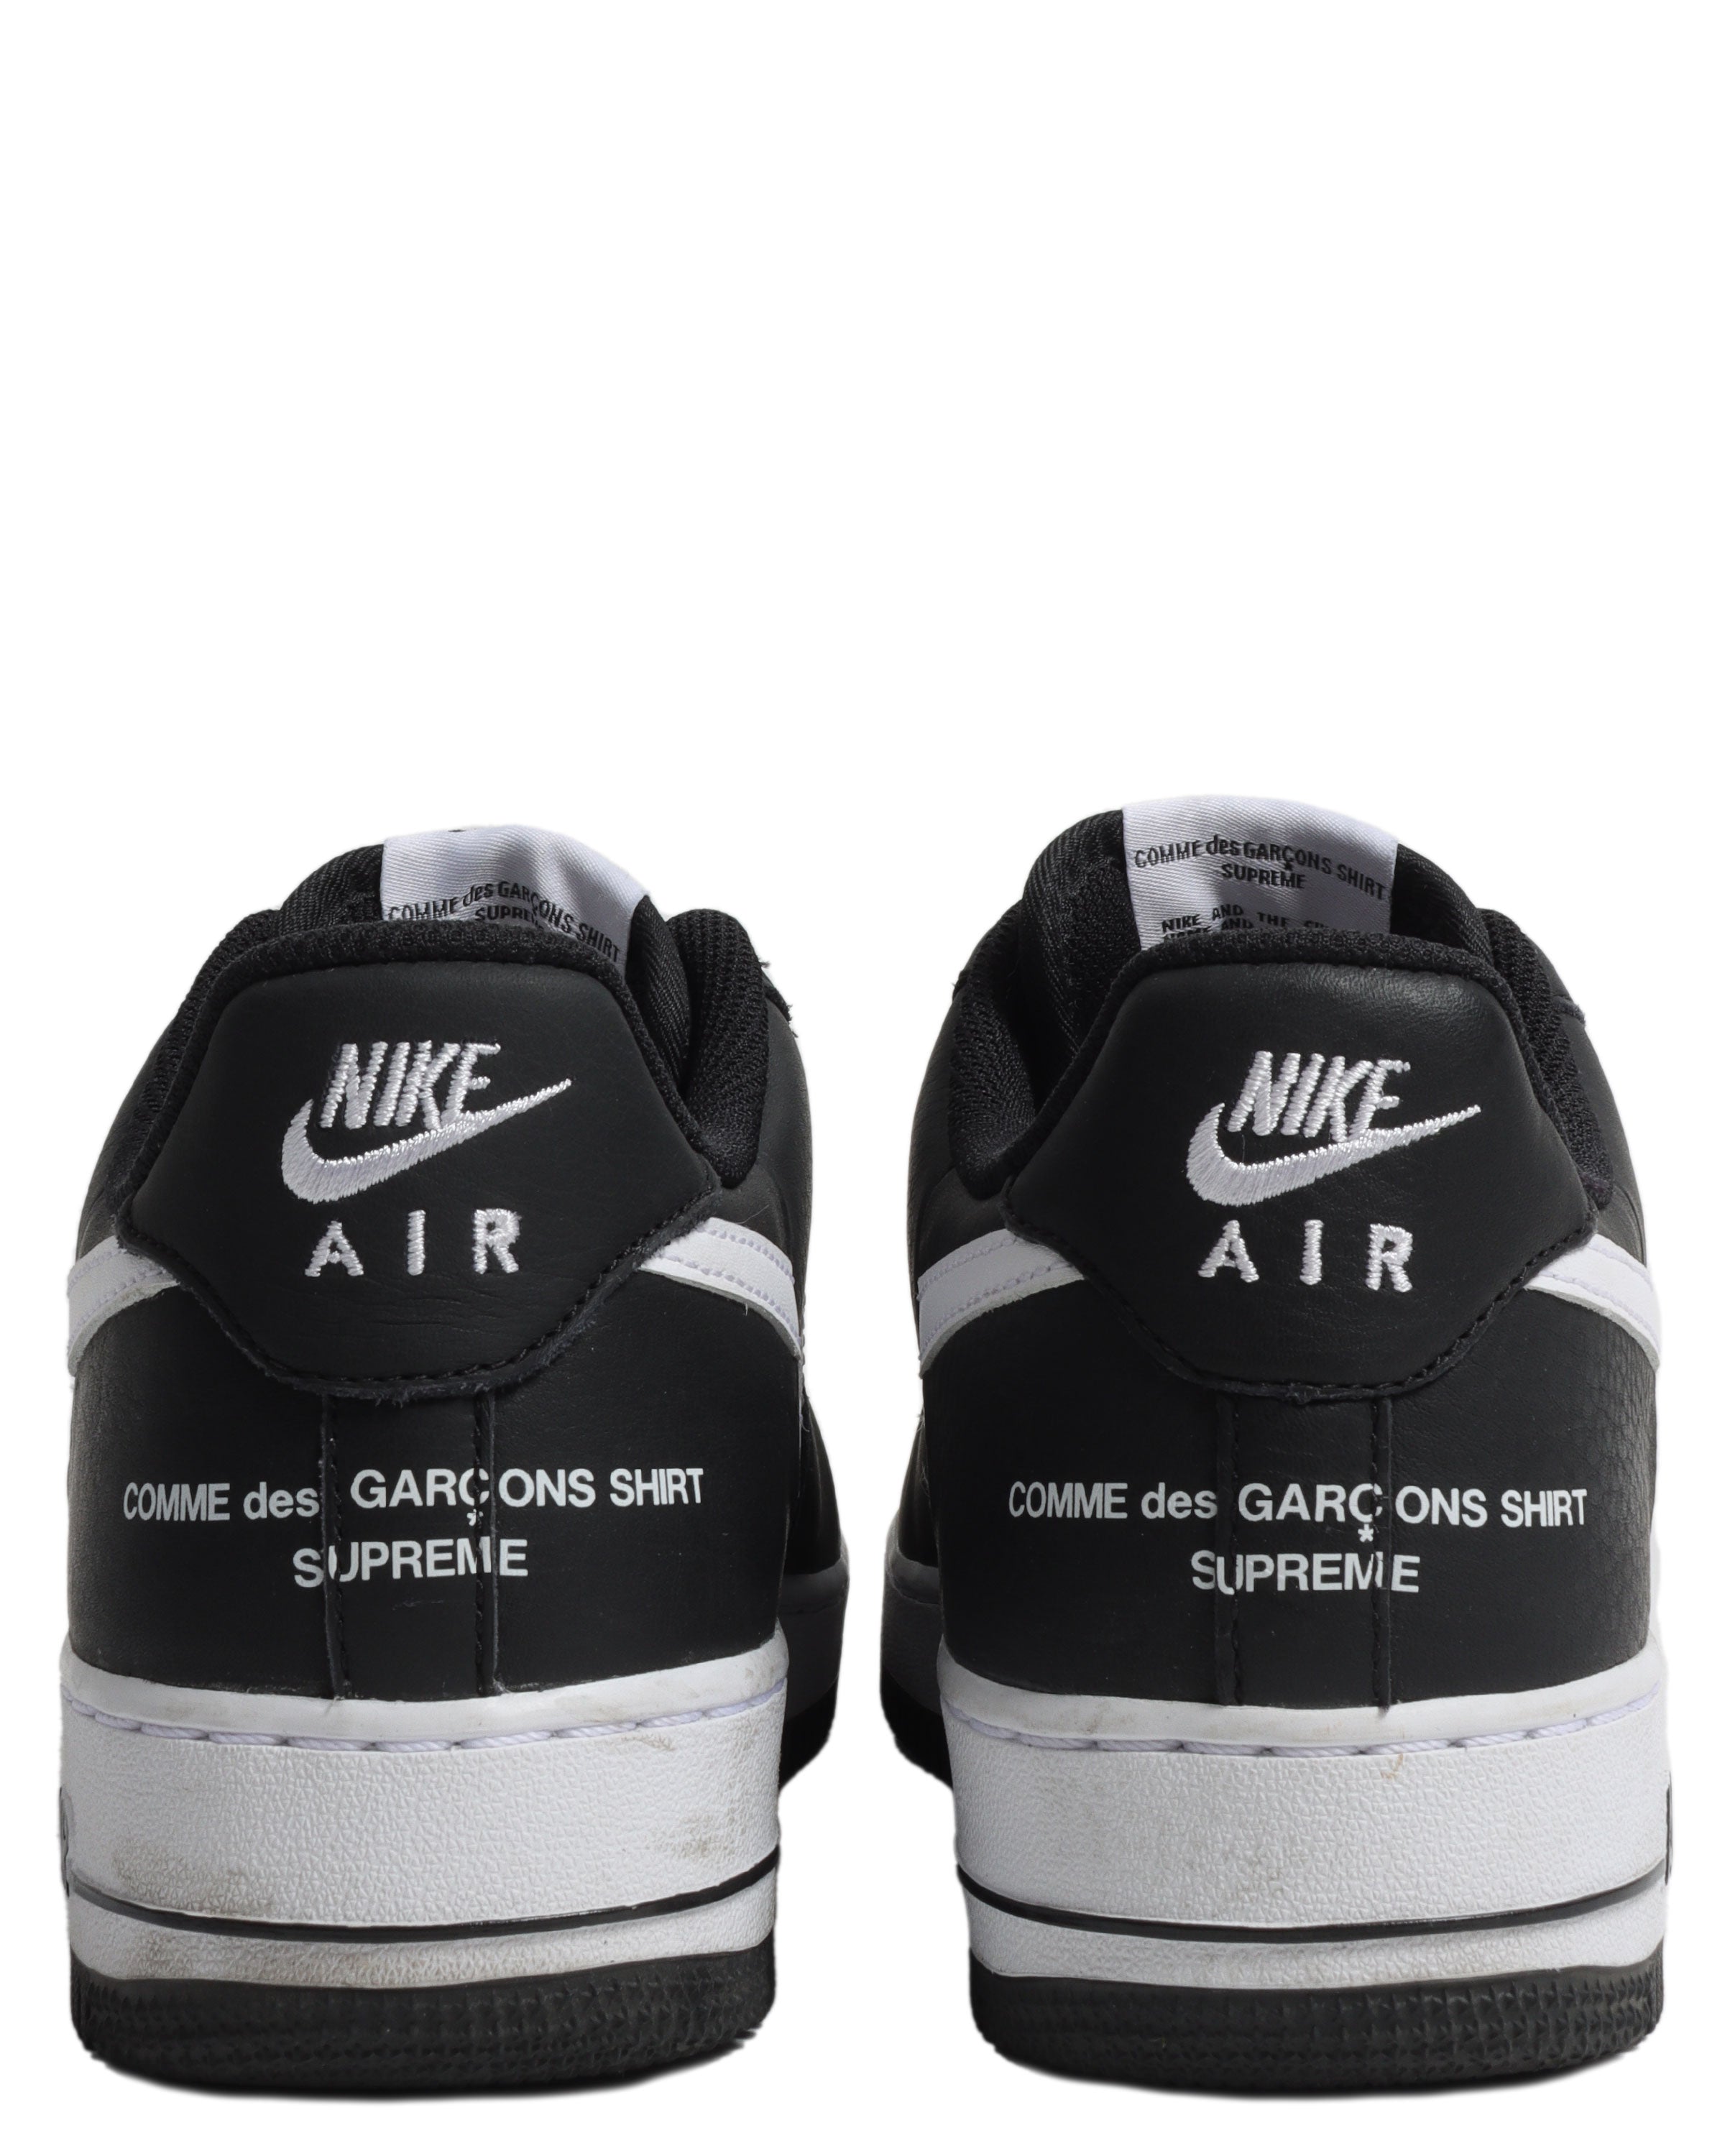 Nike Comme des Garcons Air Force 1 Low